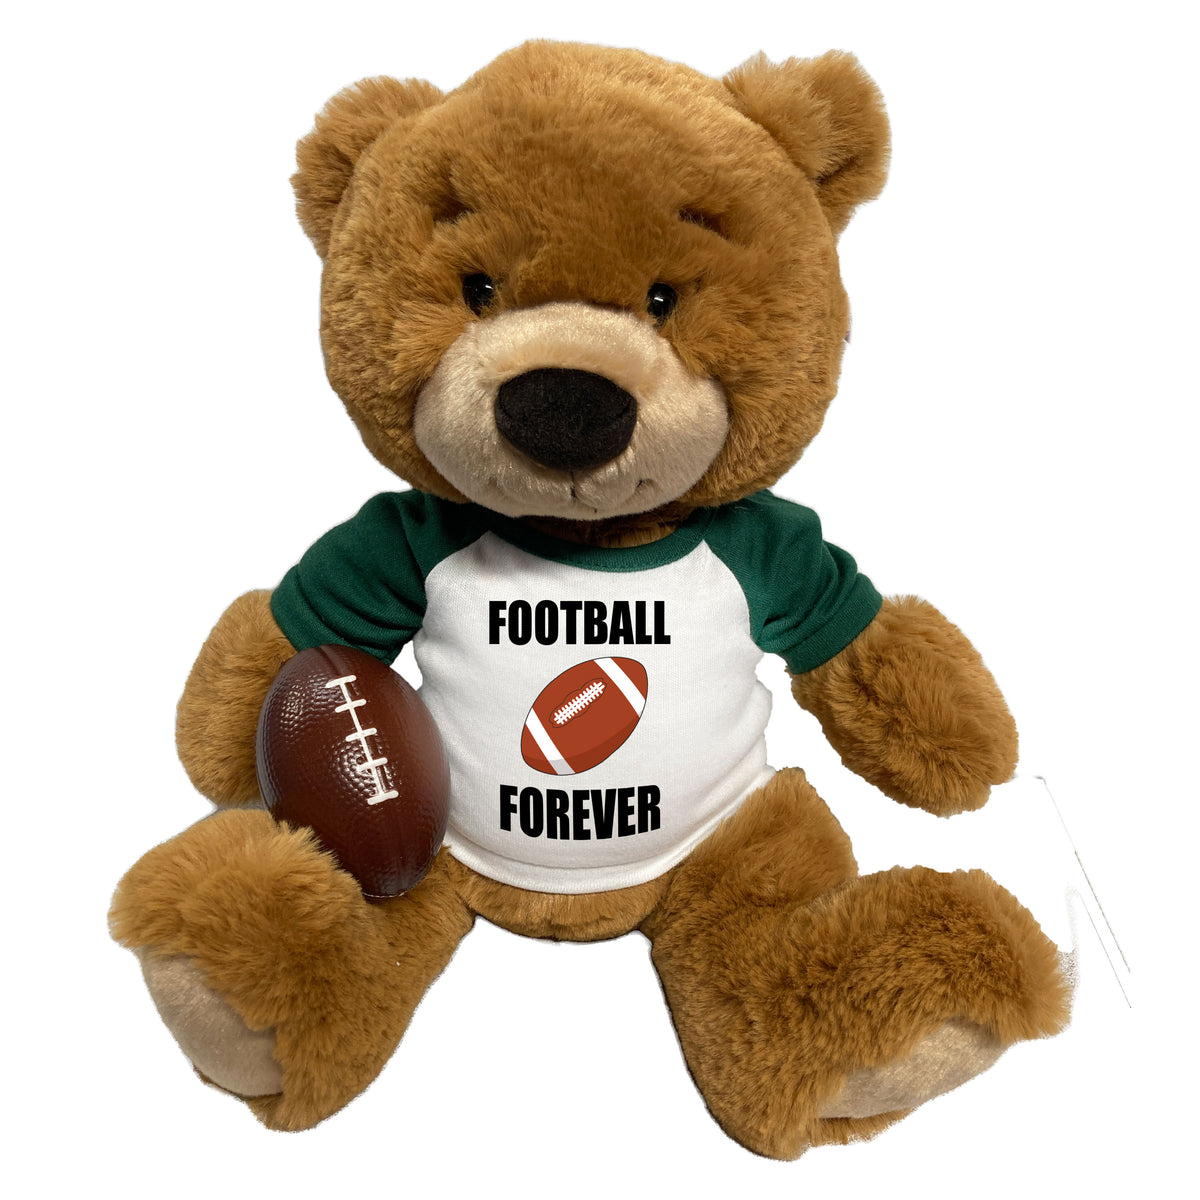 Football Teddy Bear - Personalized 14" Ginger Bear